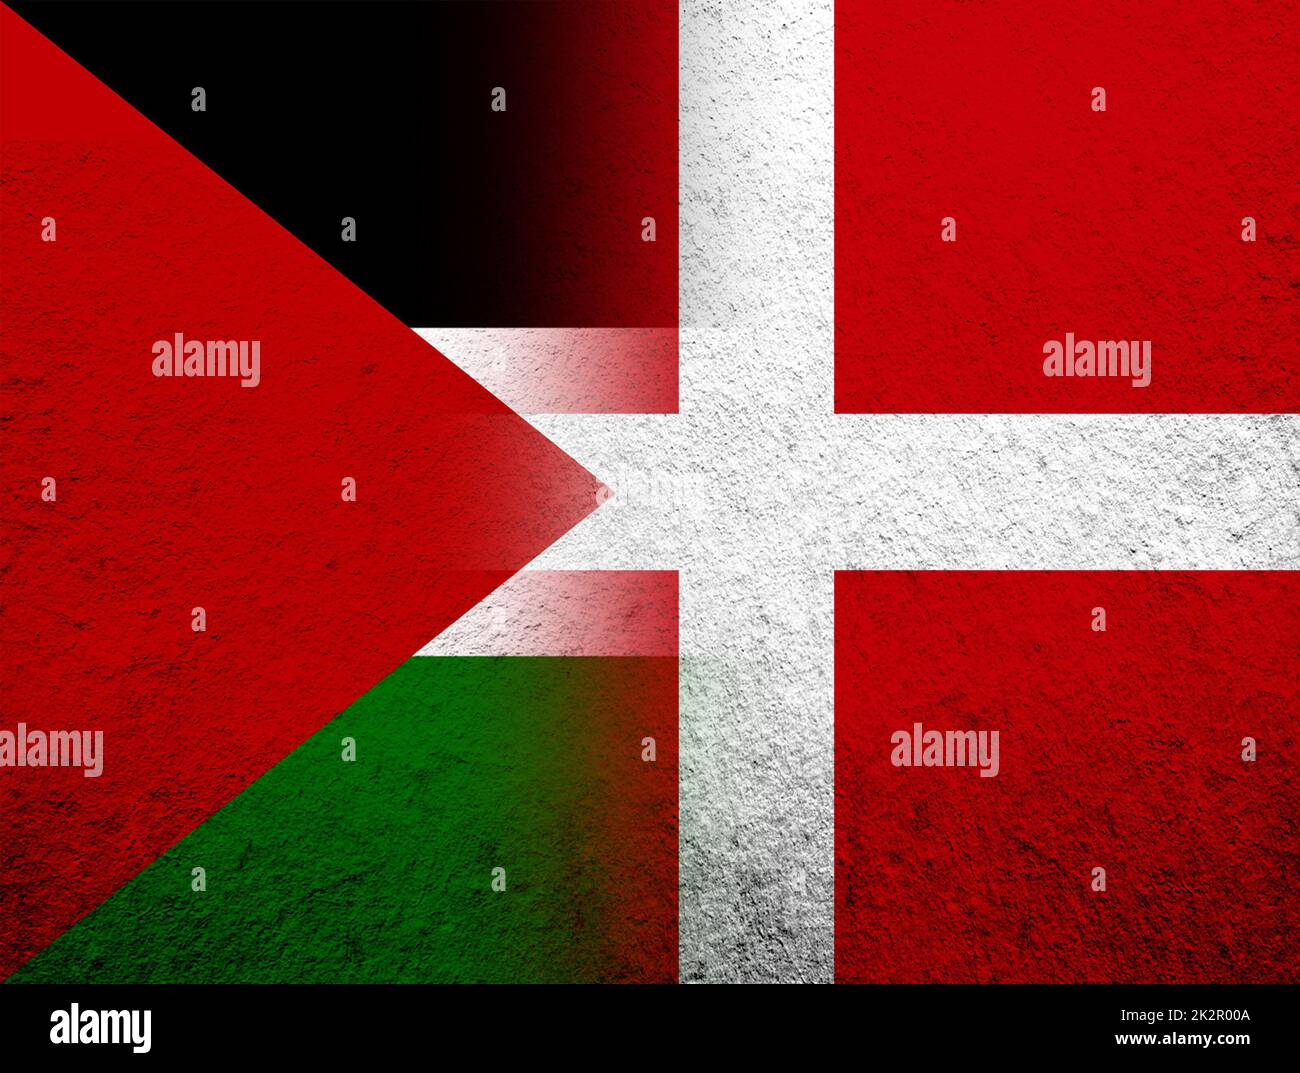 the Kingdom of Denmark National flag with Flag of Palestine. Grunge Background Stock Photo